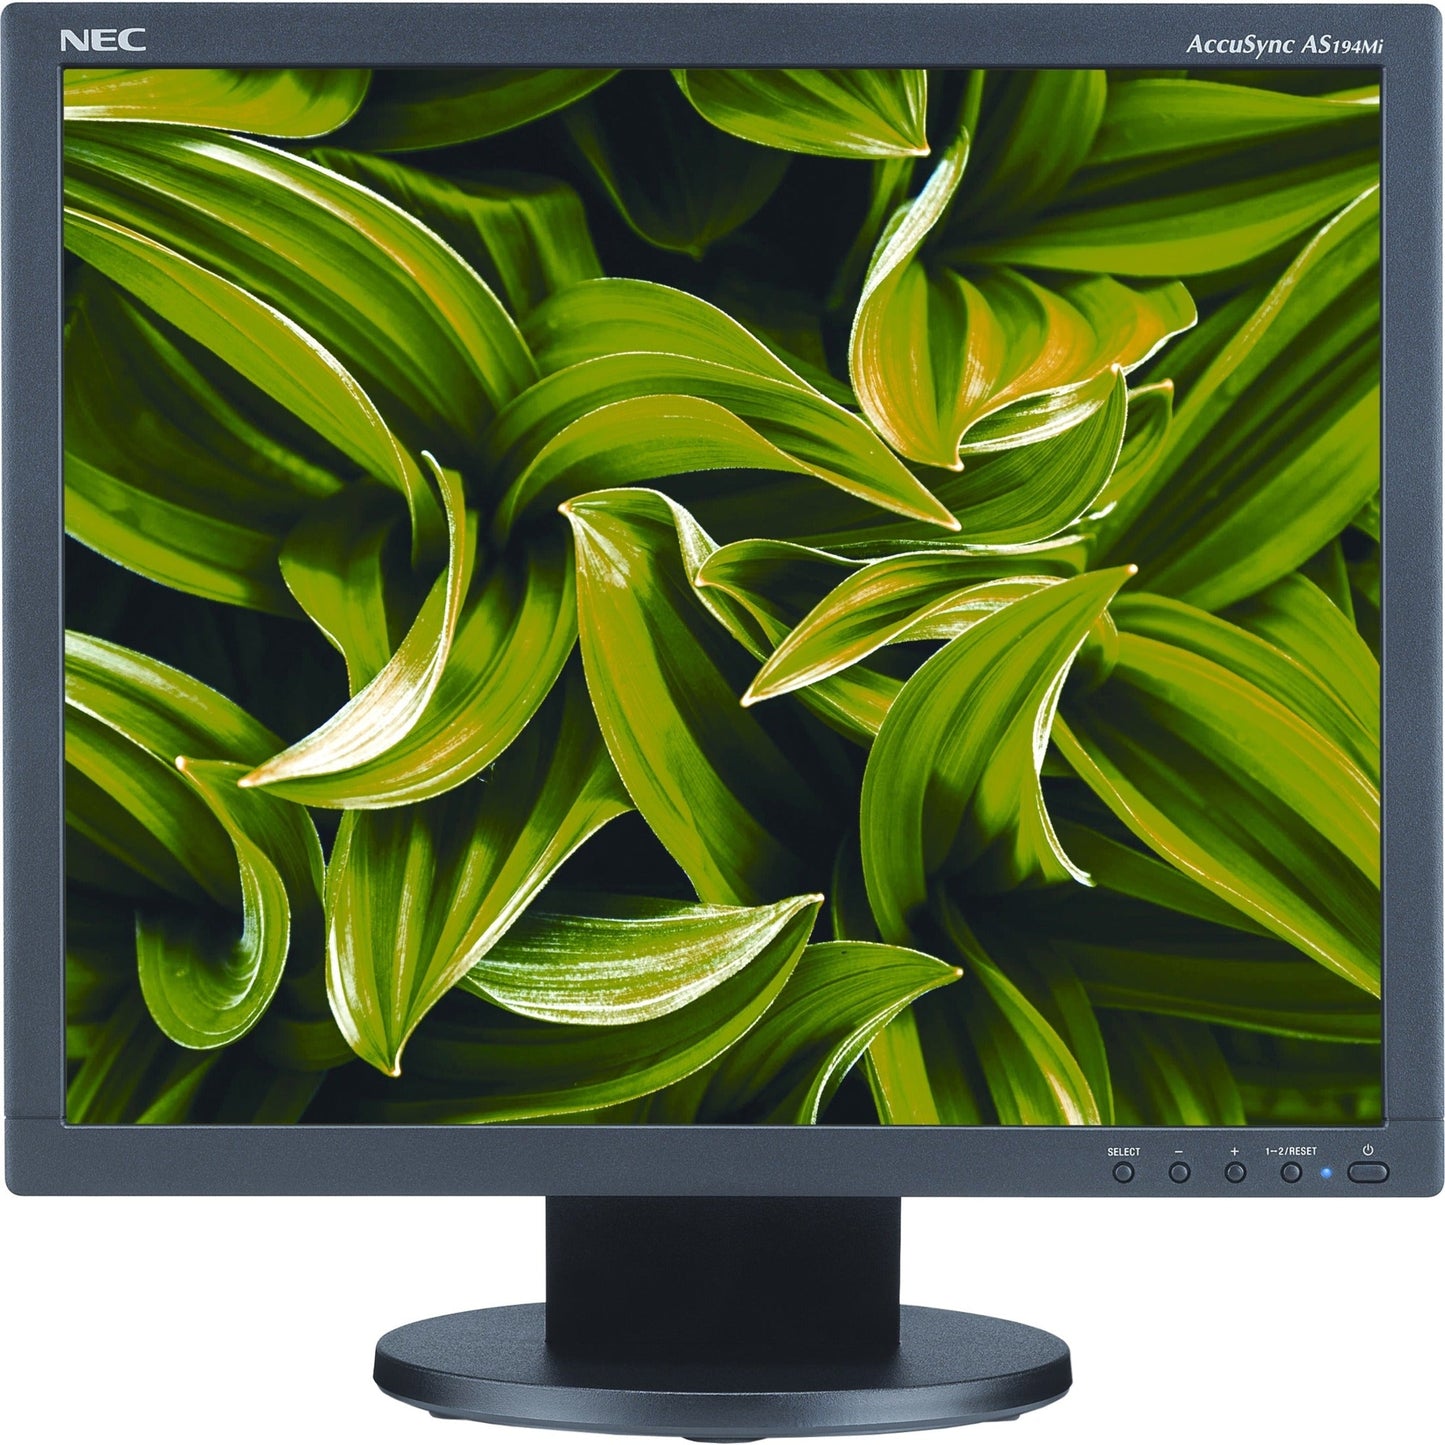 NEC Display AccuSync AS194MI-BK 19" SXGA LCD Monitor - 5:4